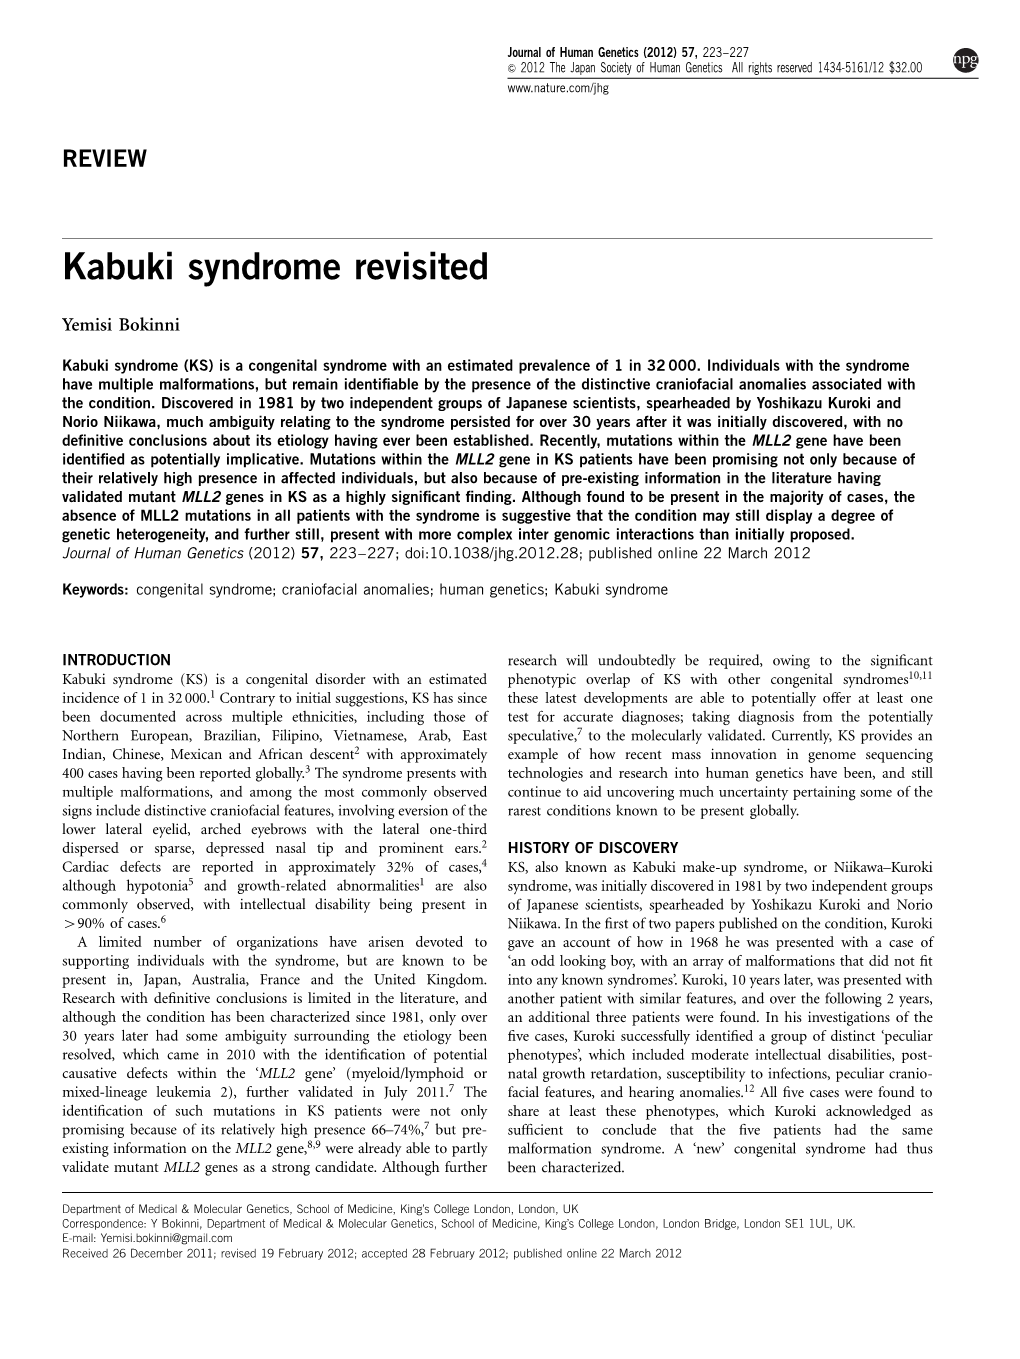 Kabuki Syndrome Revisited